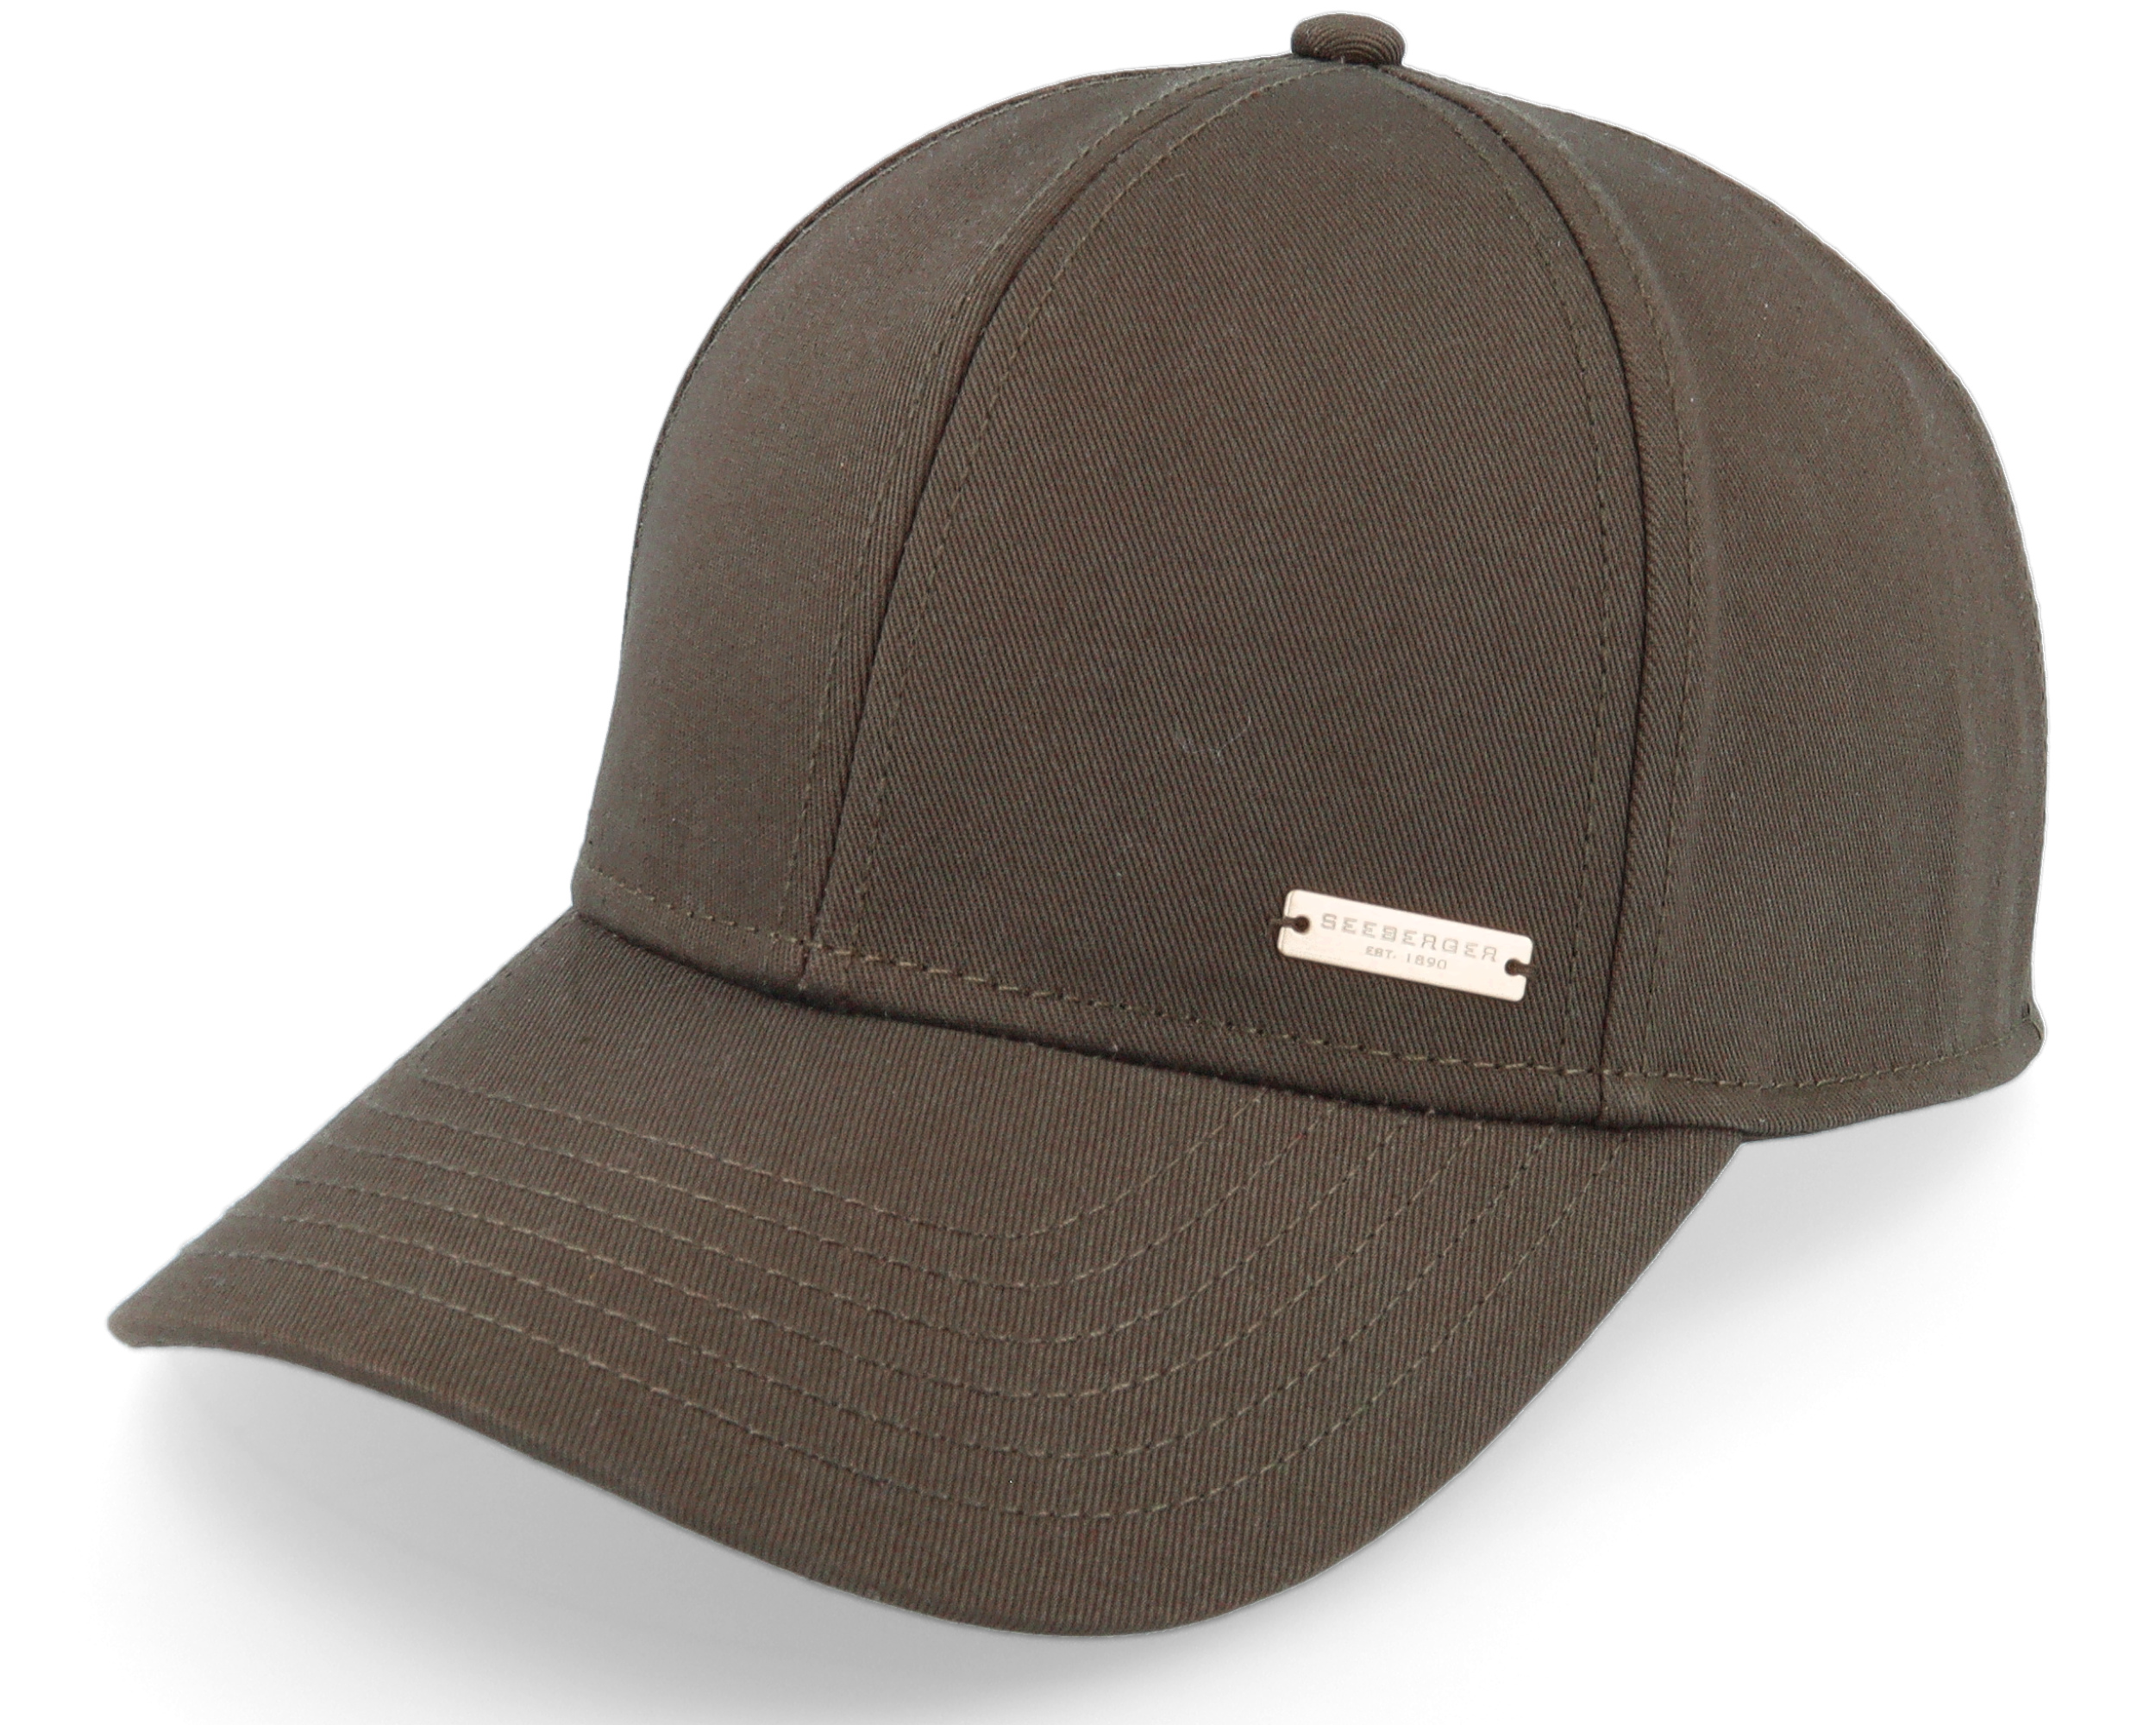 Cotton Fabric Baseball Cap Khaki Adjustable - Seeberger cap